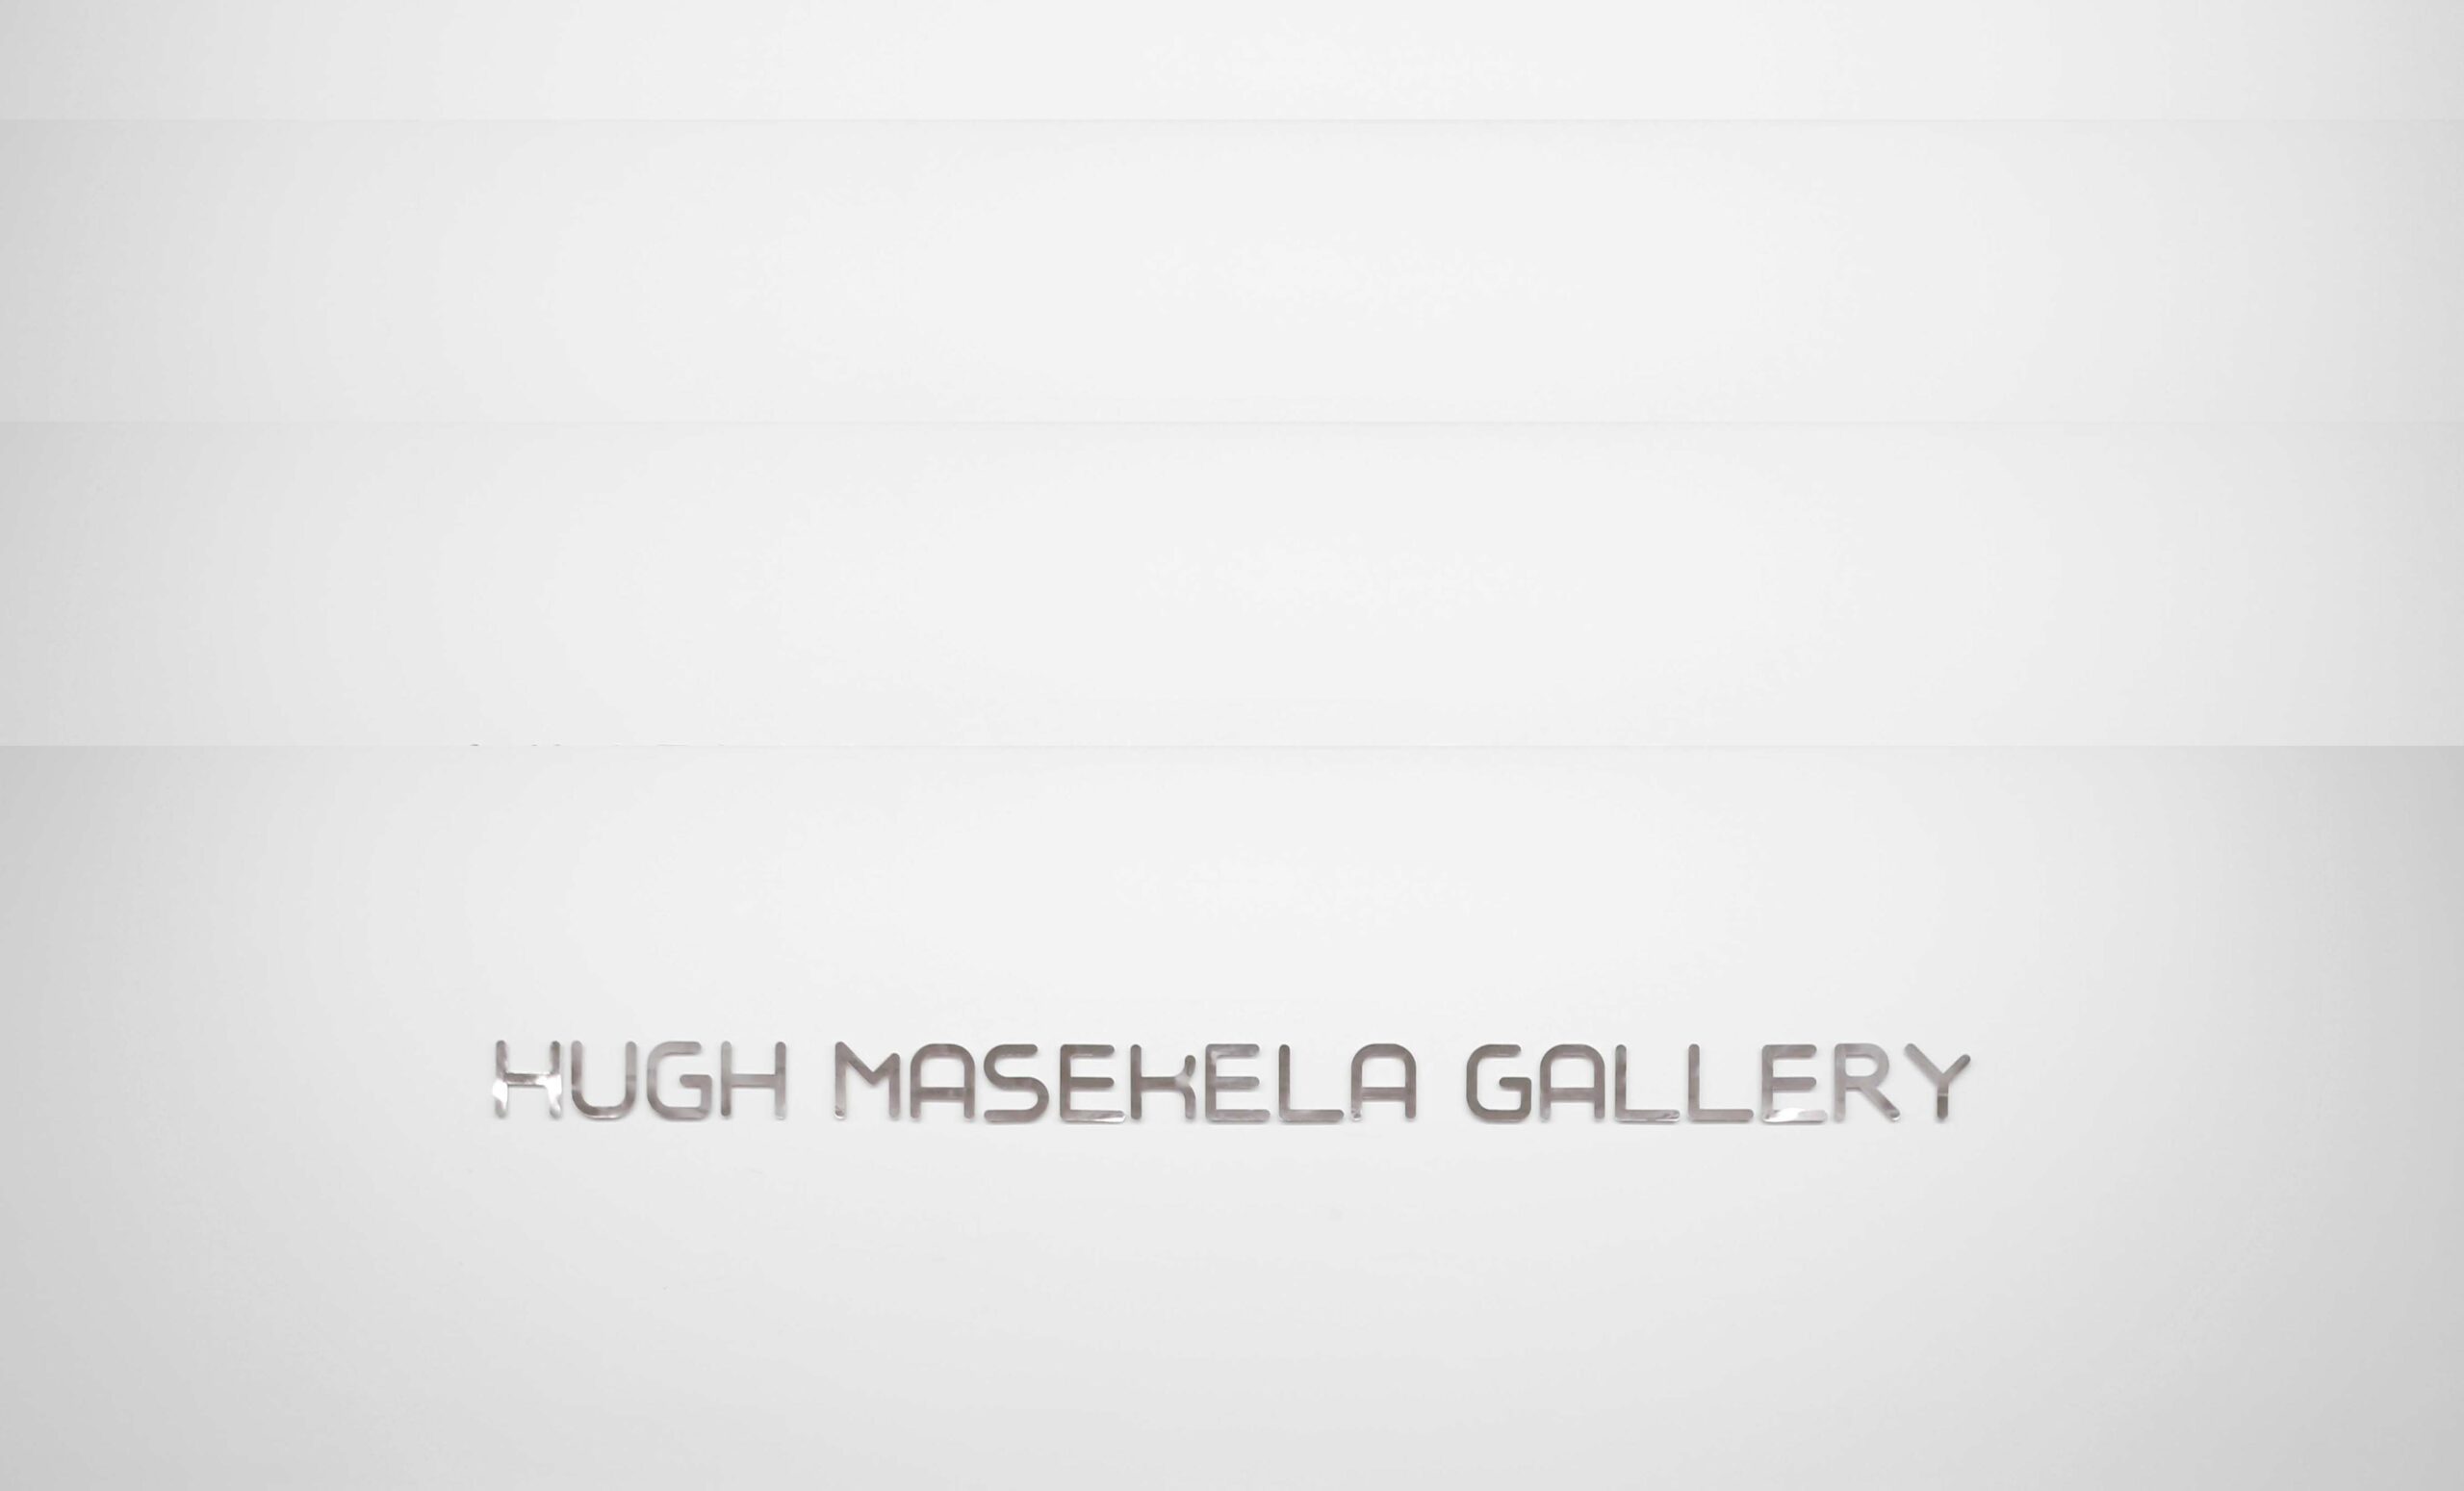 31572018_L02_PC Gallery 15_Hugh Masekela Gallery unveiling_v2